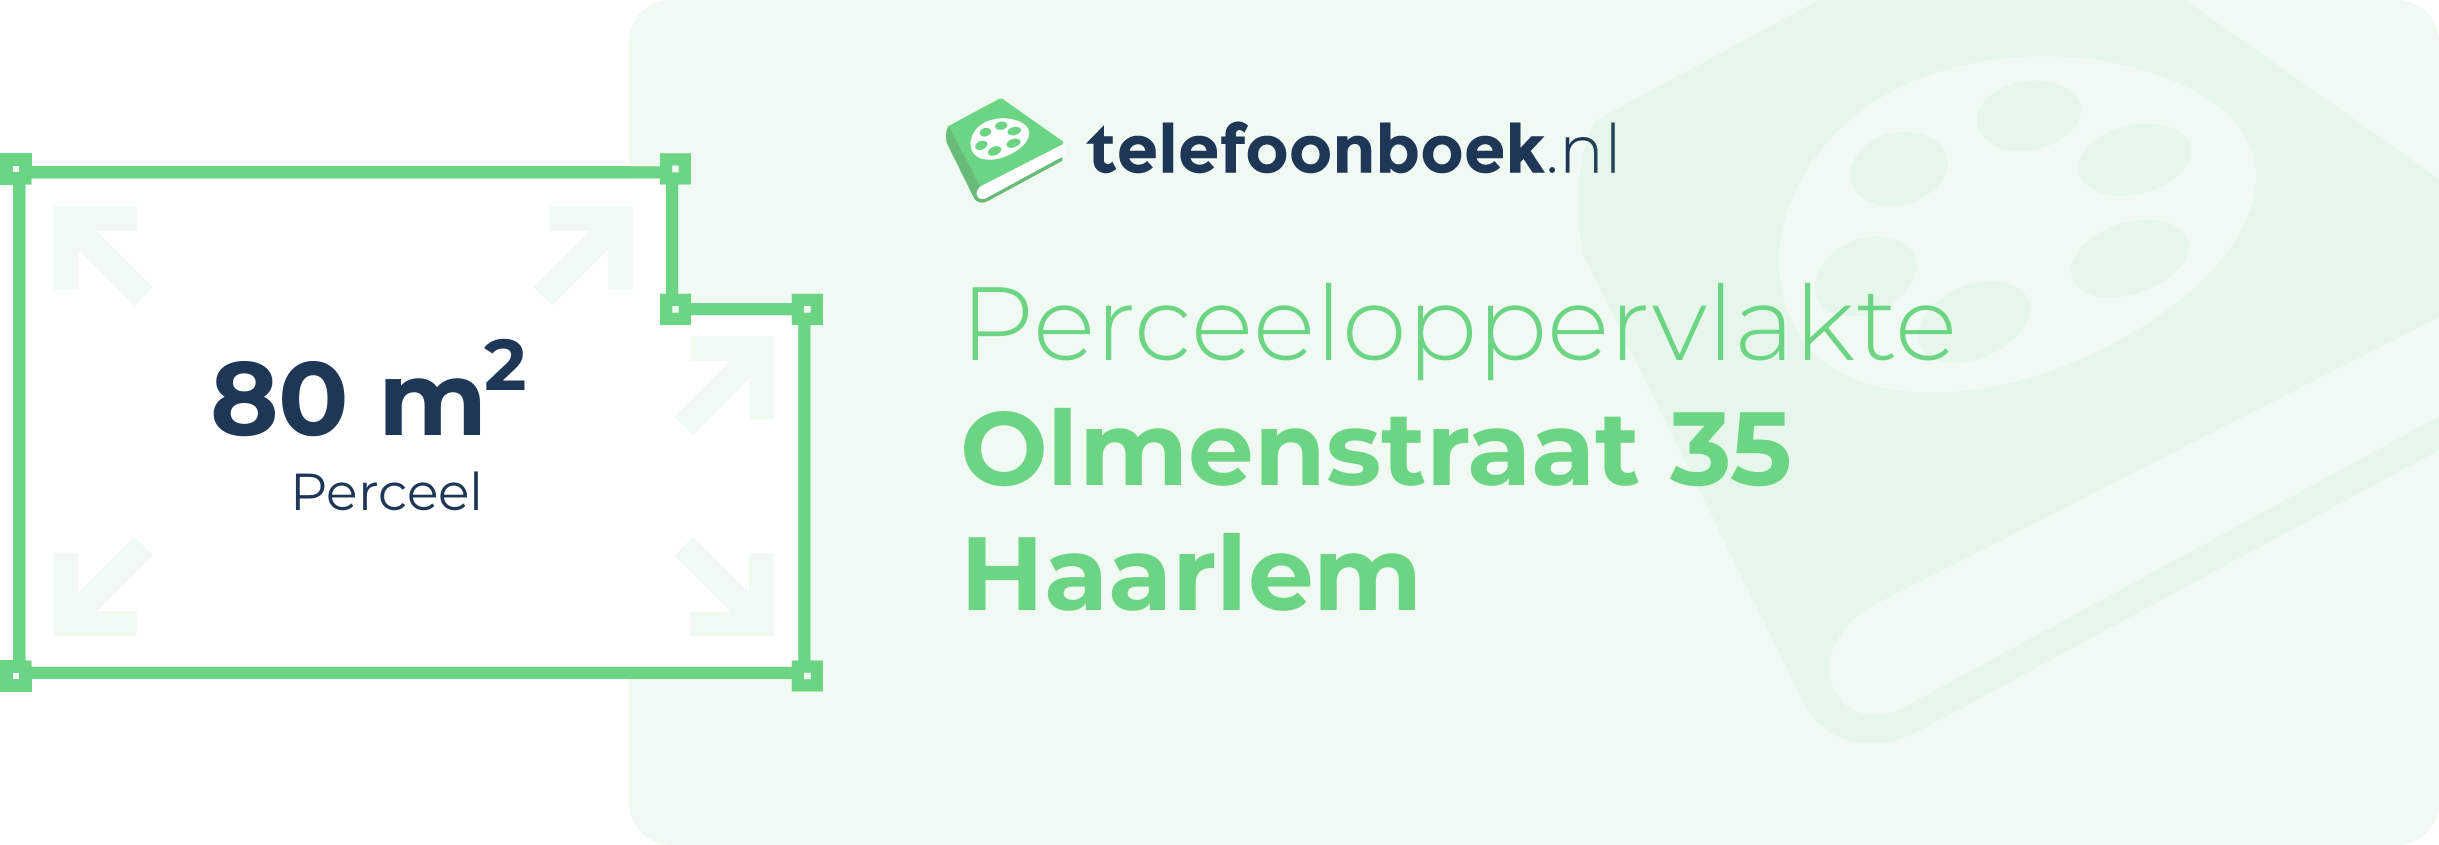 Perceeloppervlakte Olmenstraat 35 Haarlem